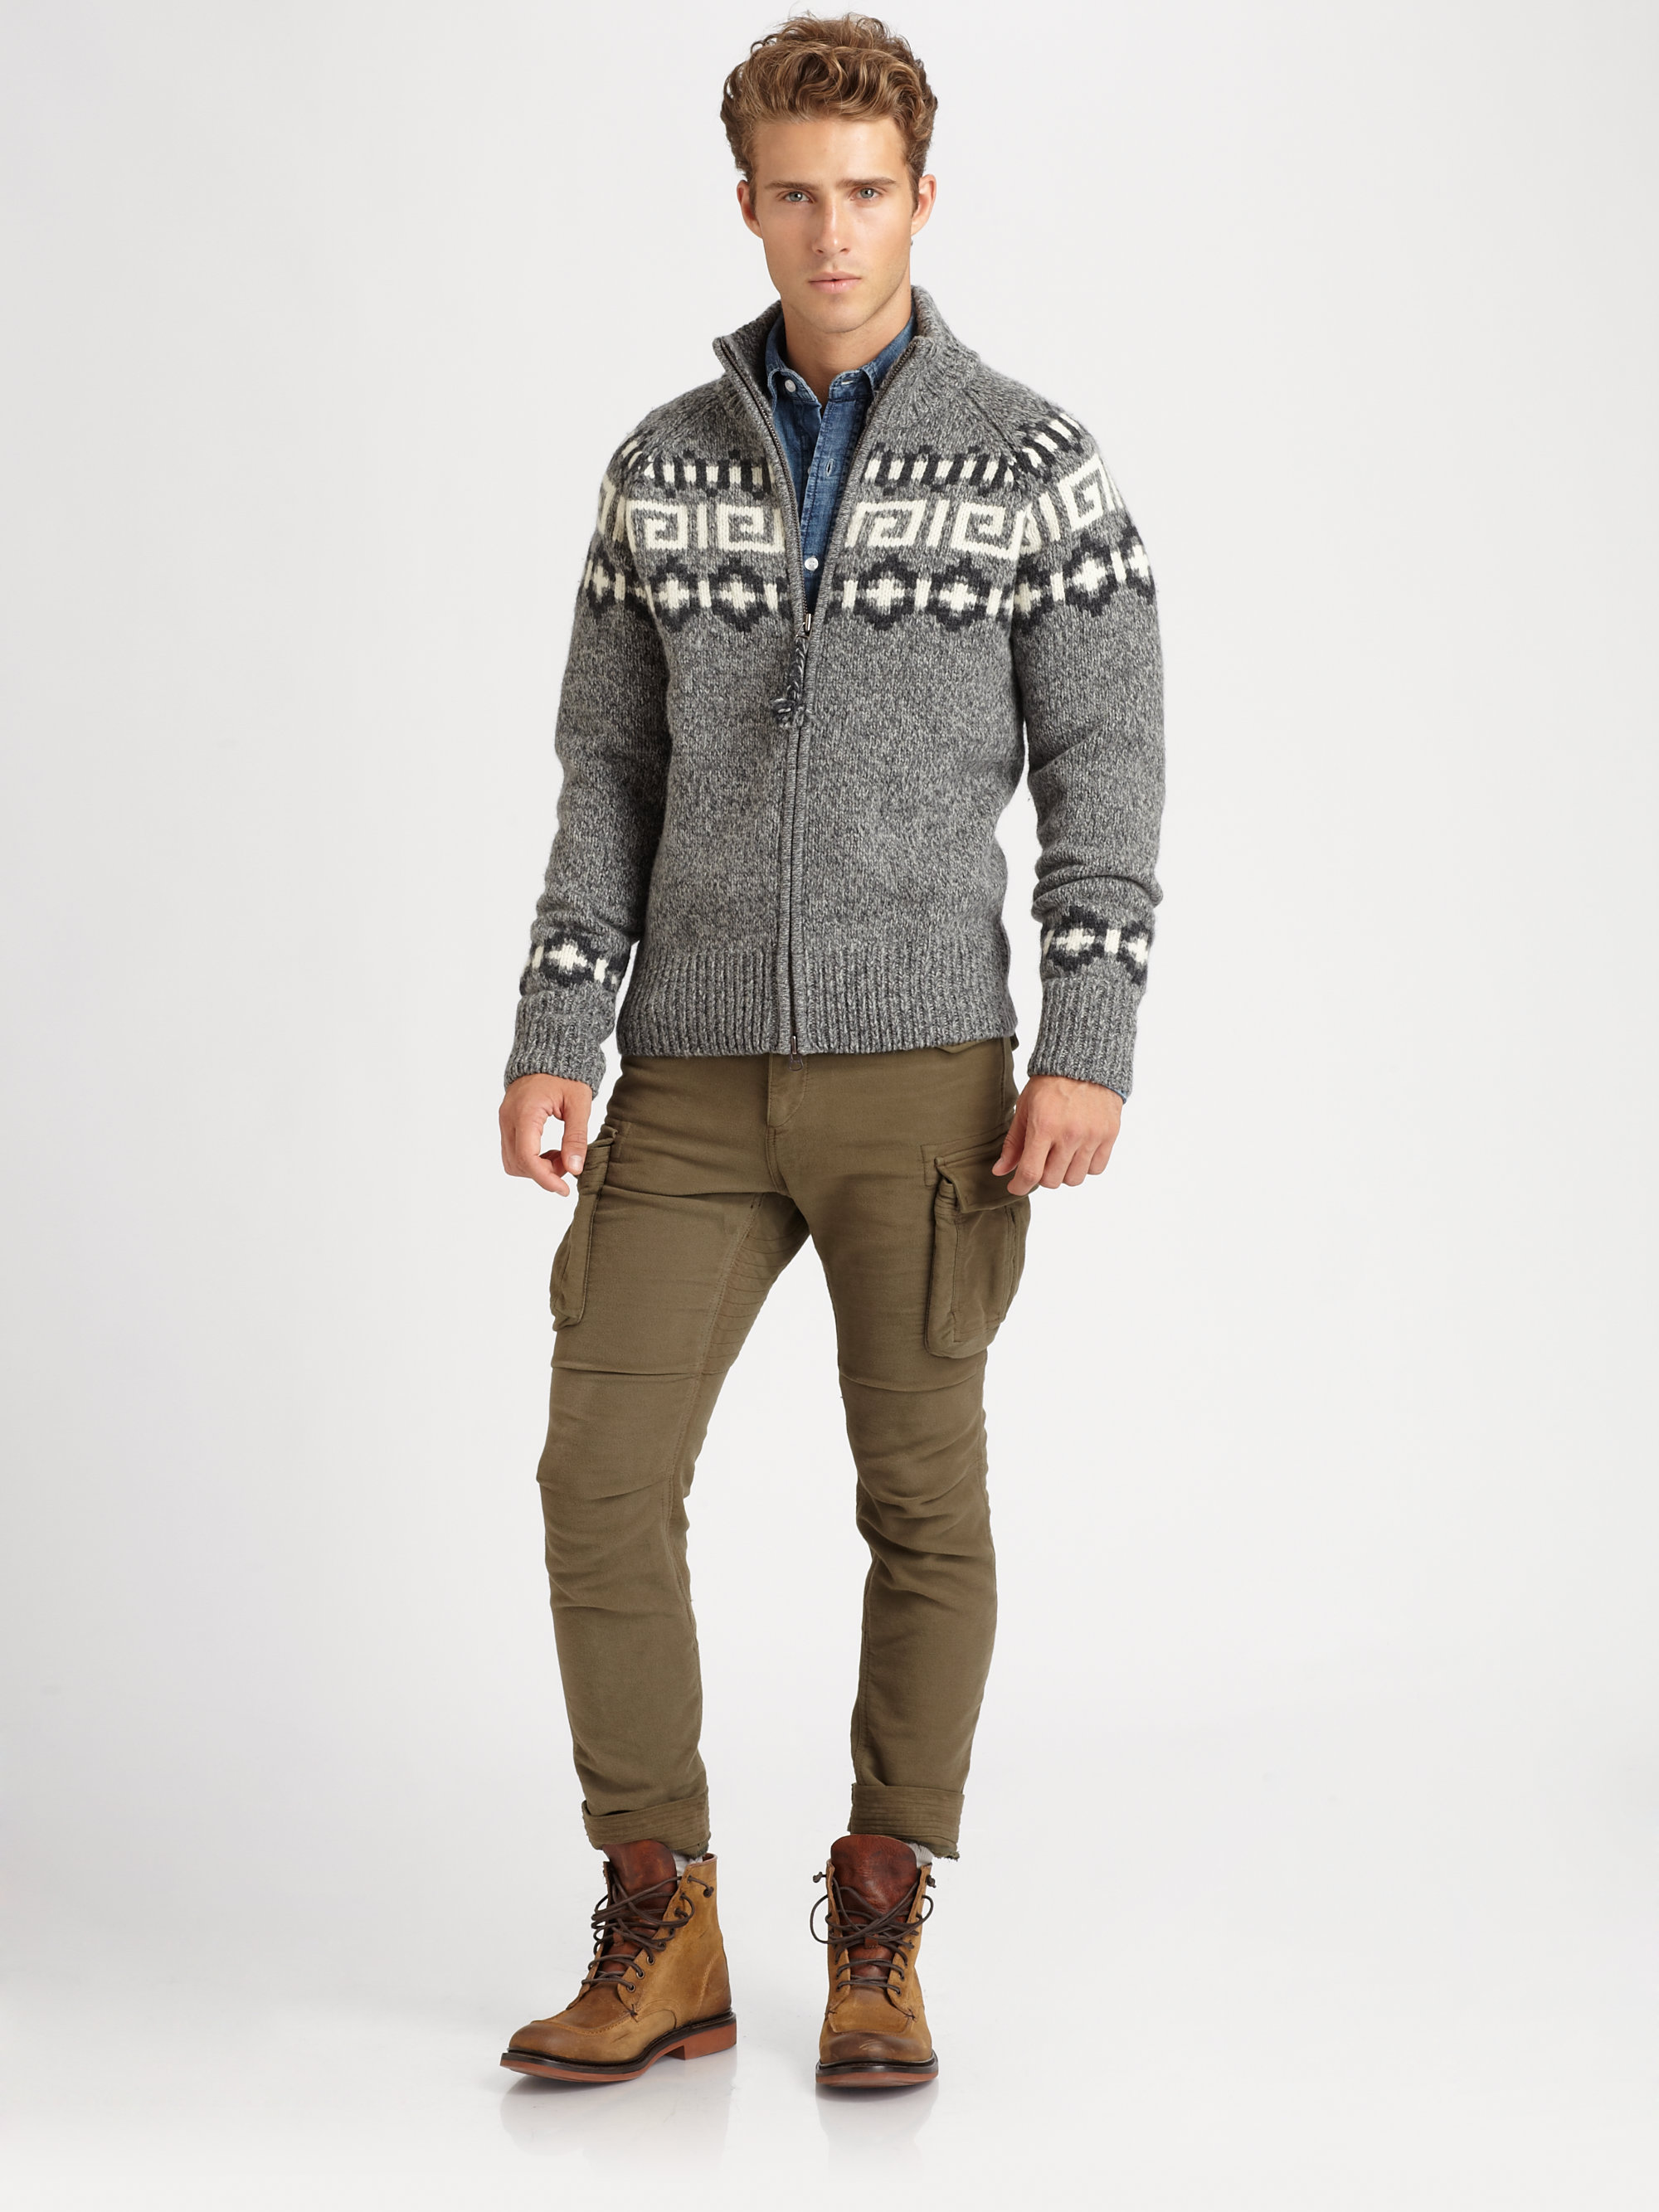 Lyst - Gant Woolknit Zip Sweater in Gray for Men